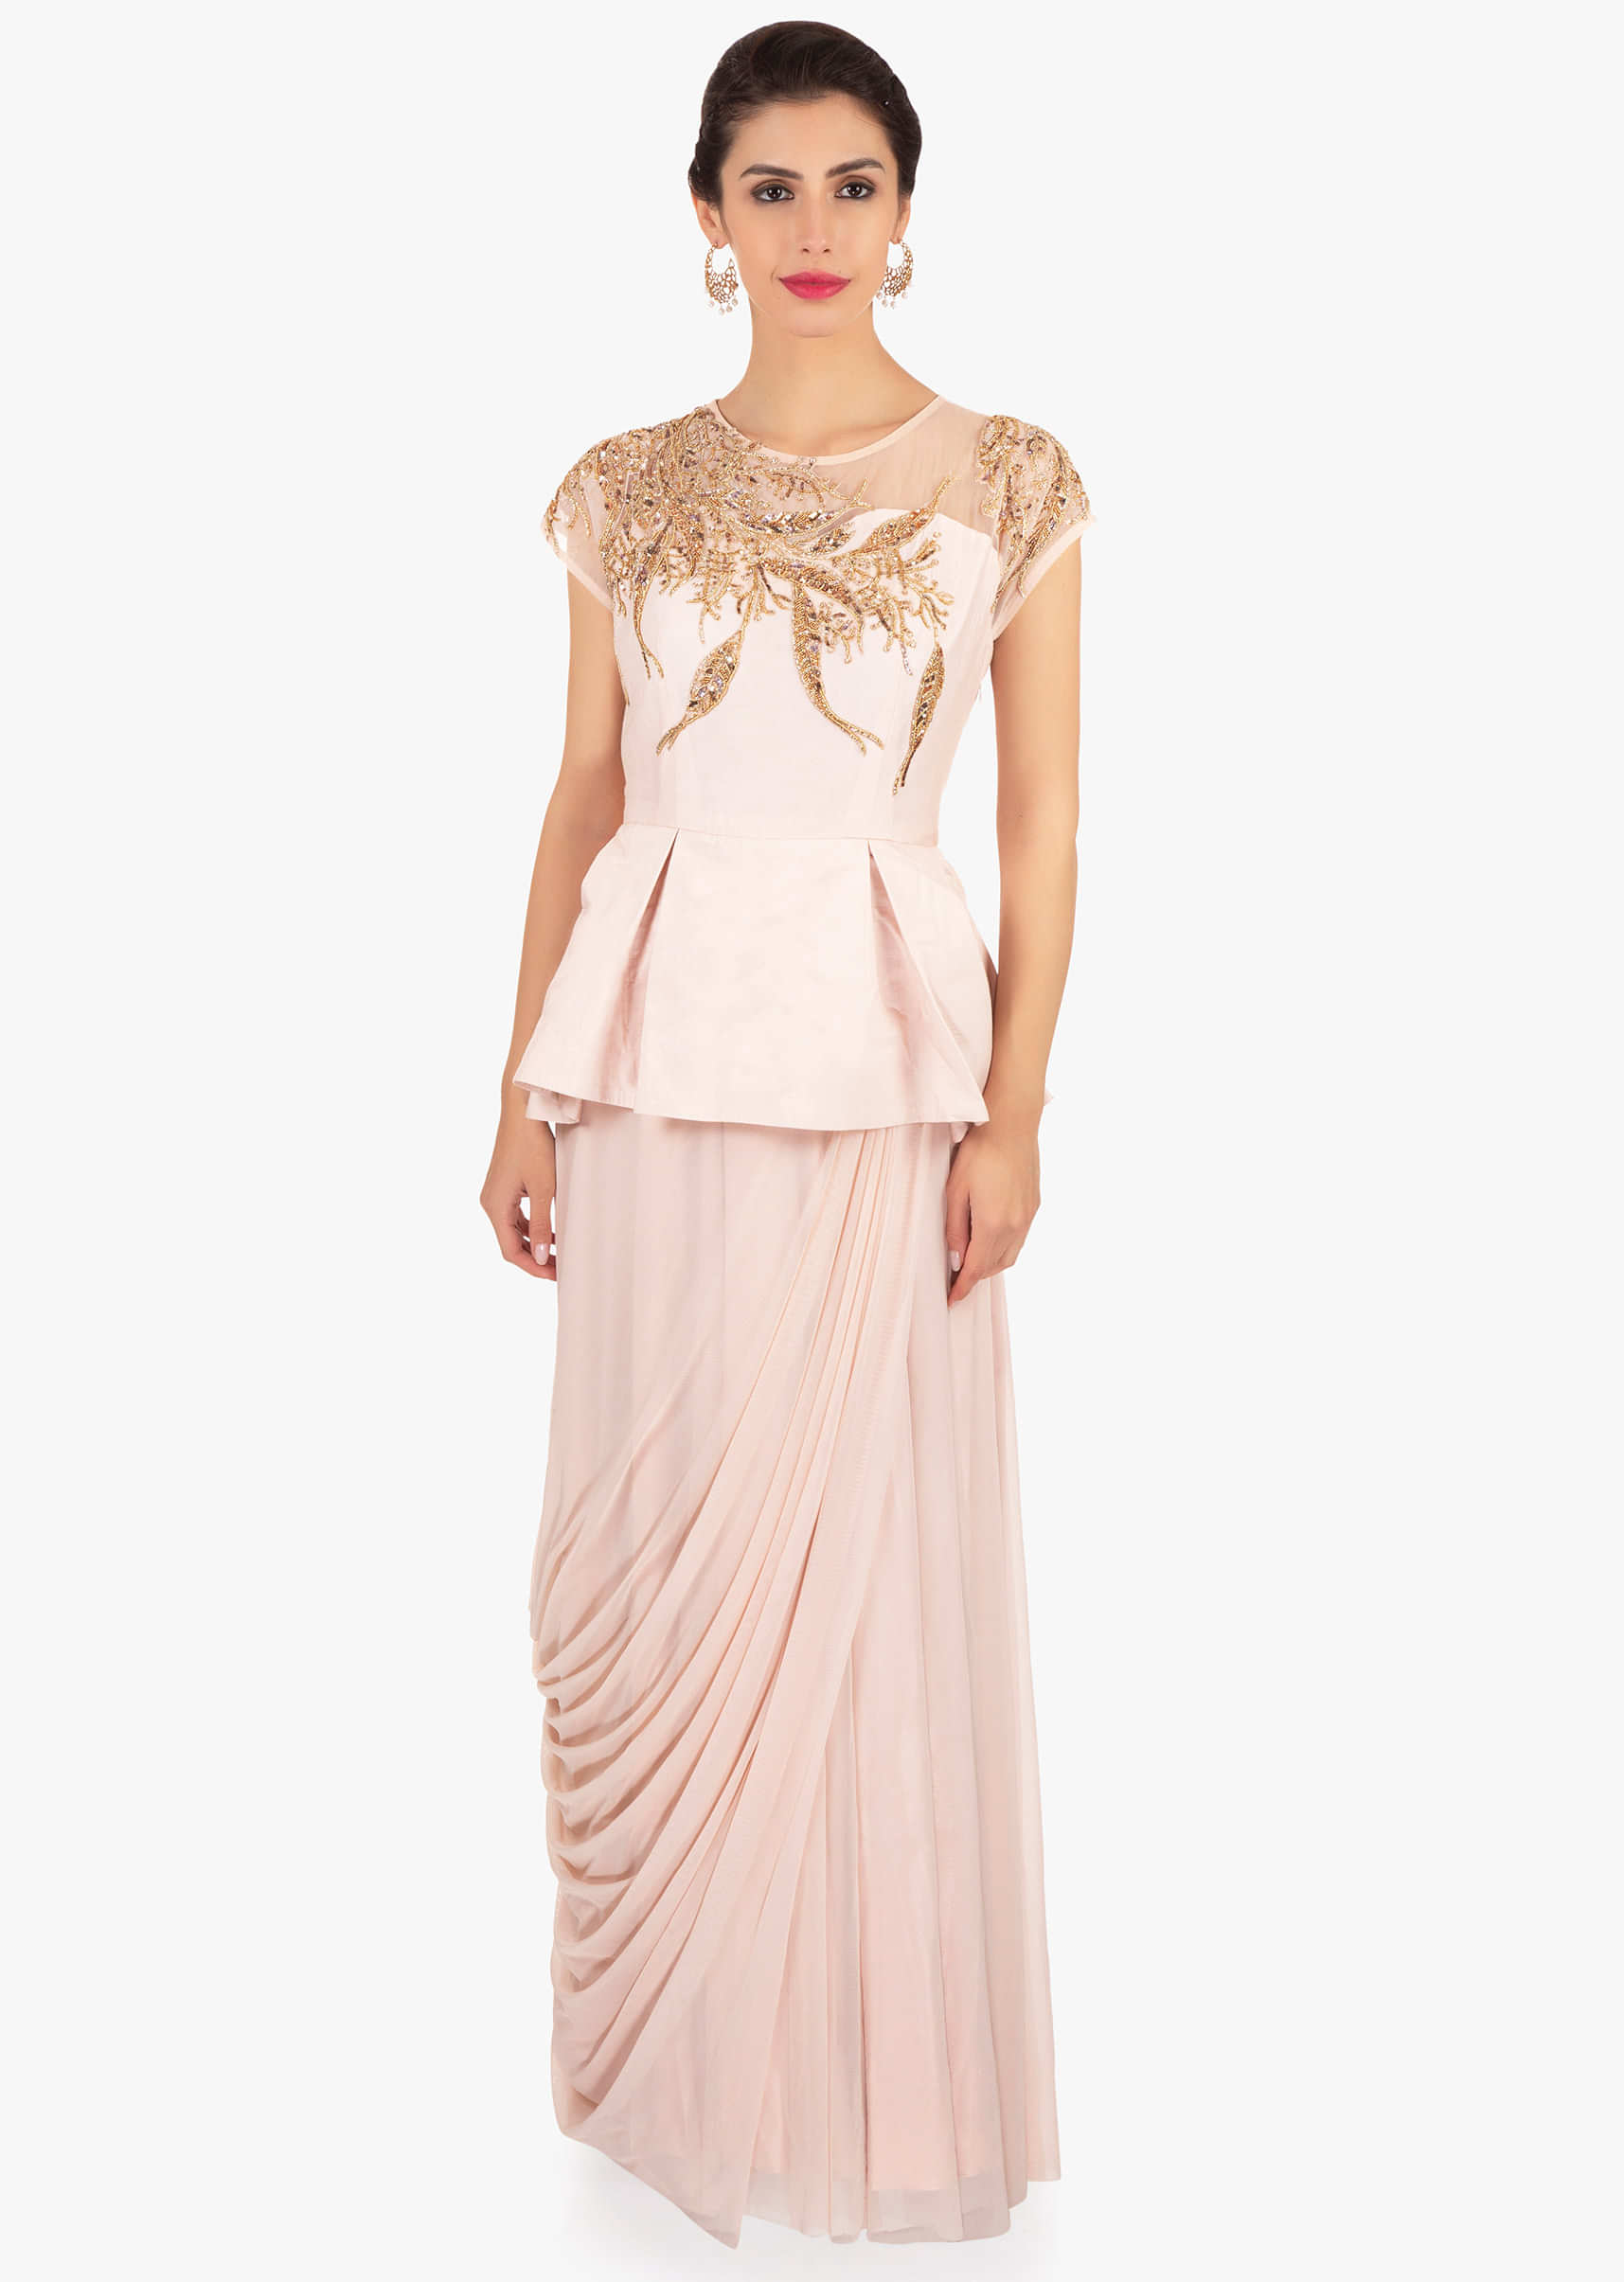 Light peach soft net gown with peplum style bodice